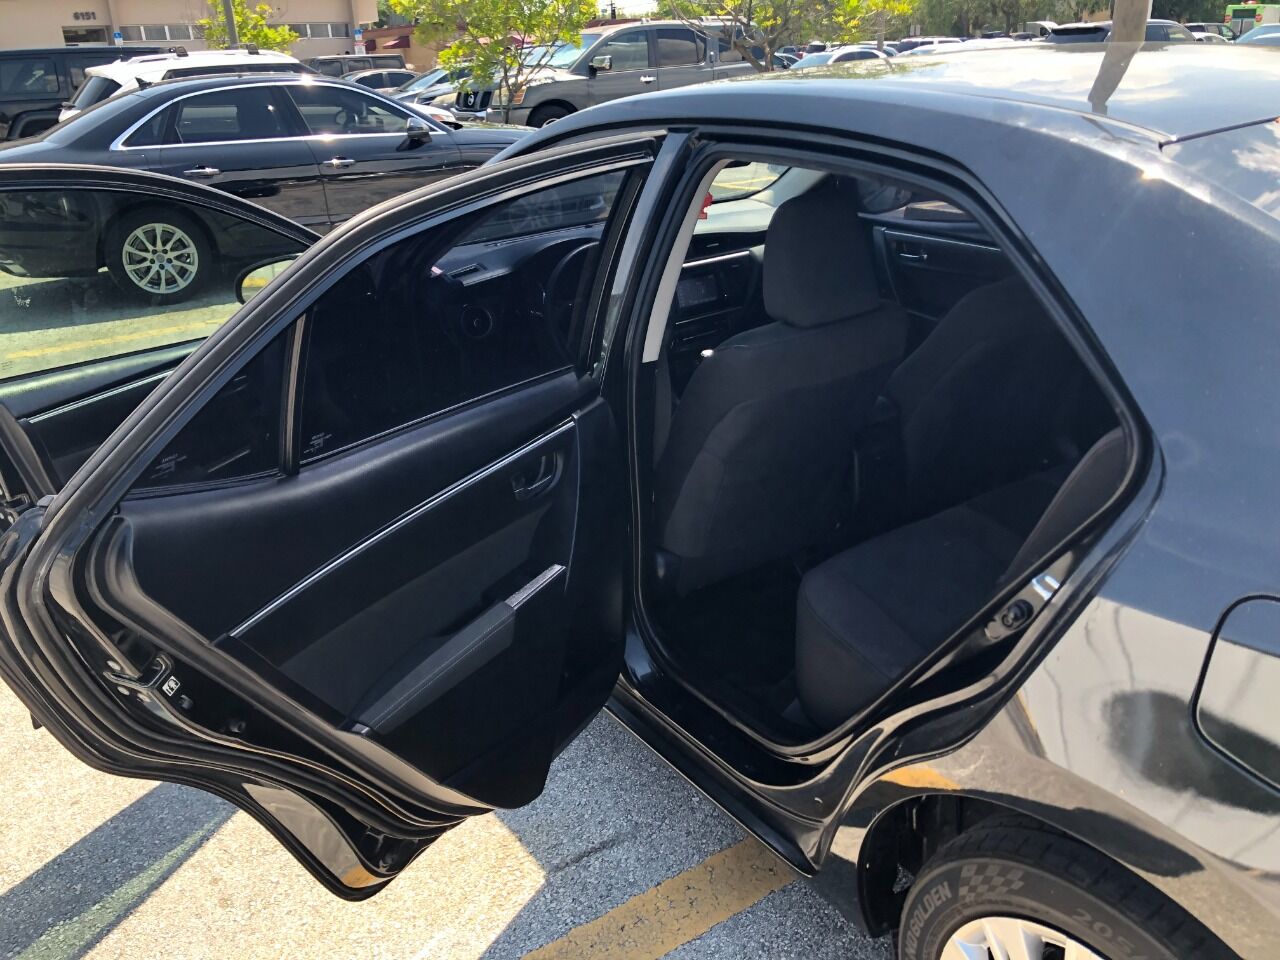 2017 TOYOTA Corolla Sedan - $14,900